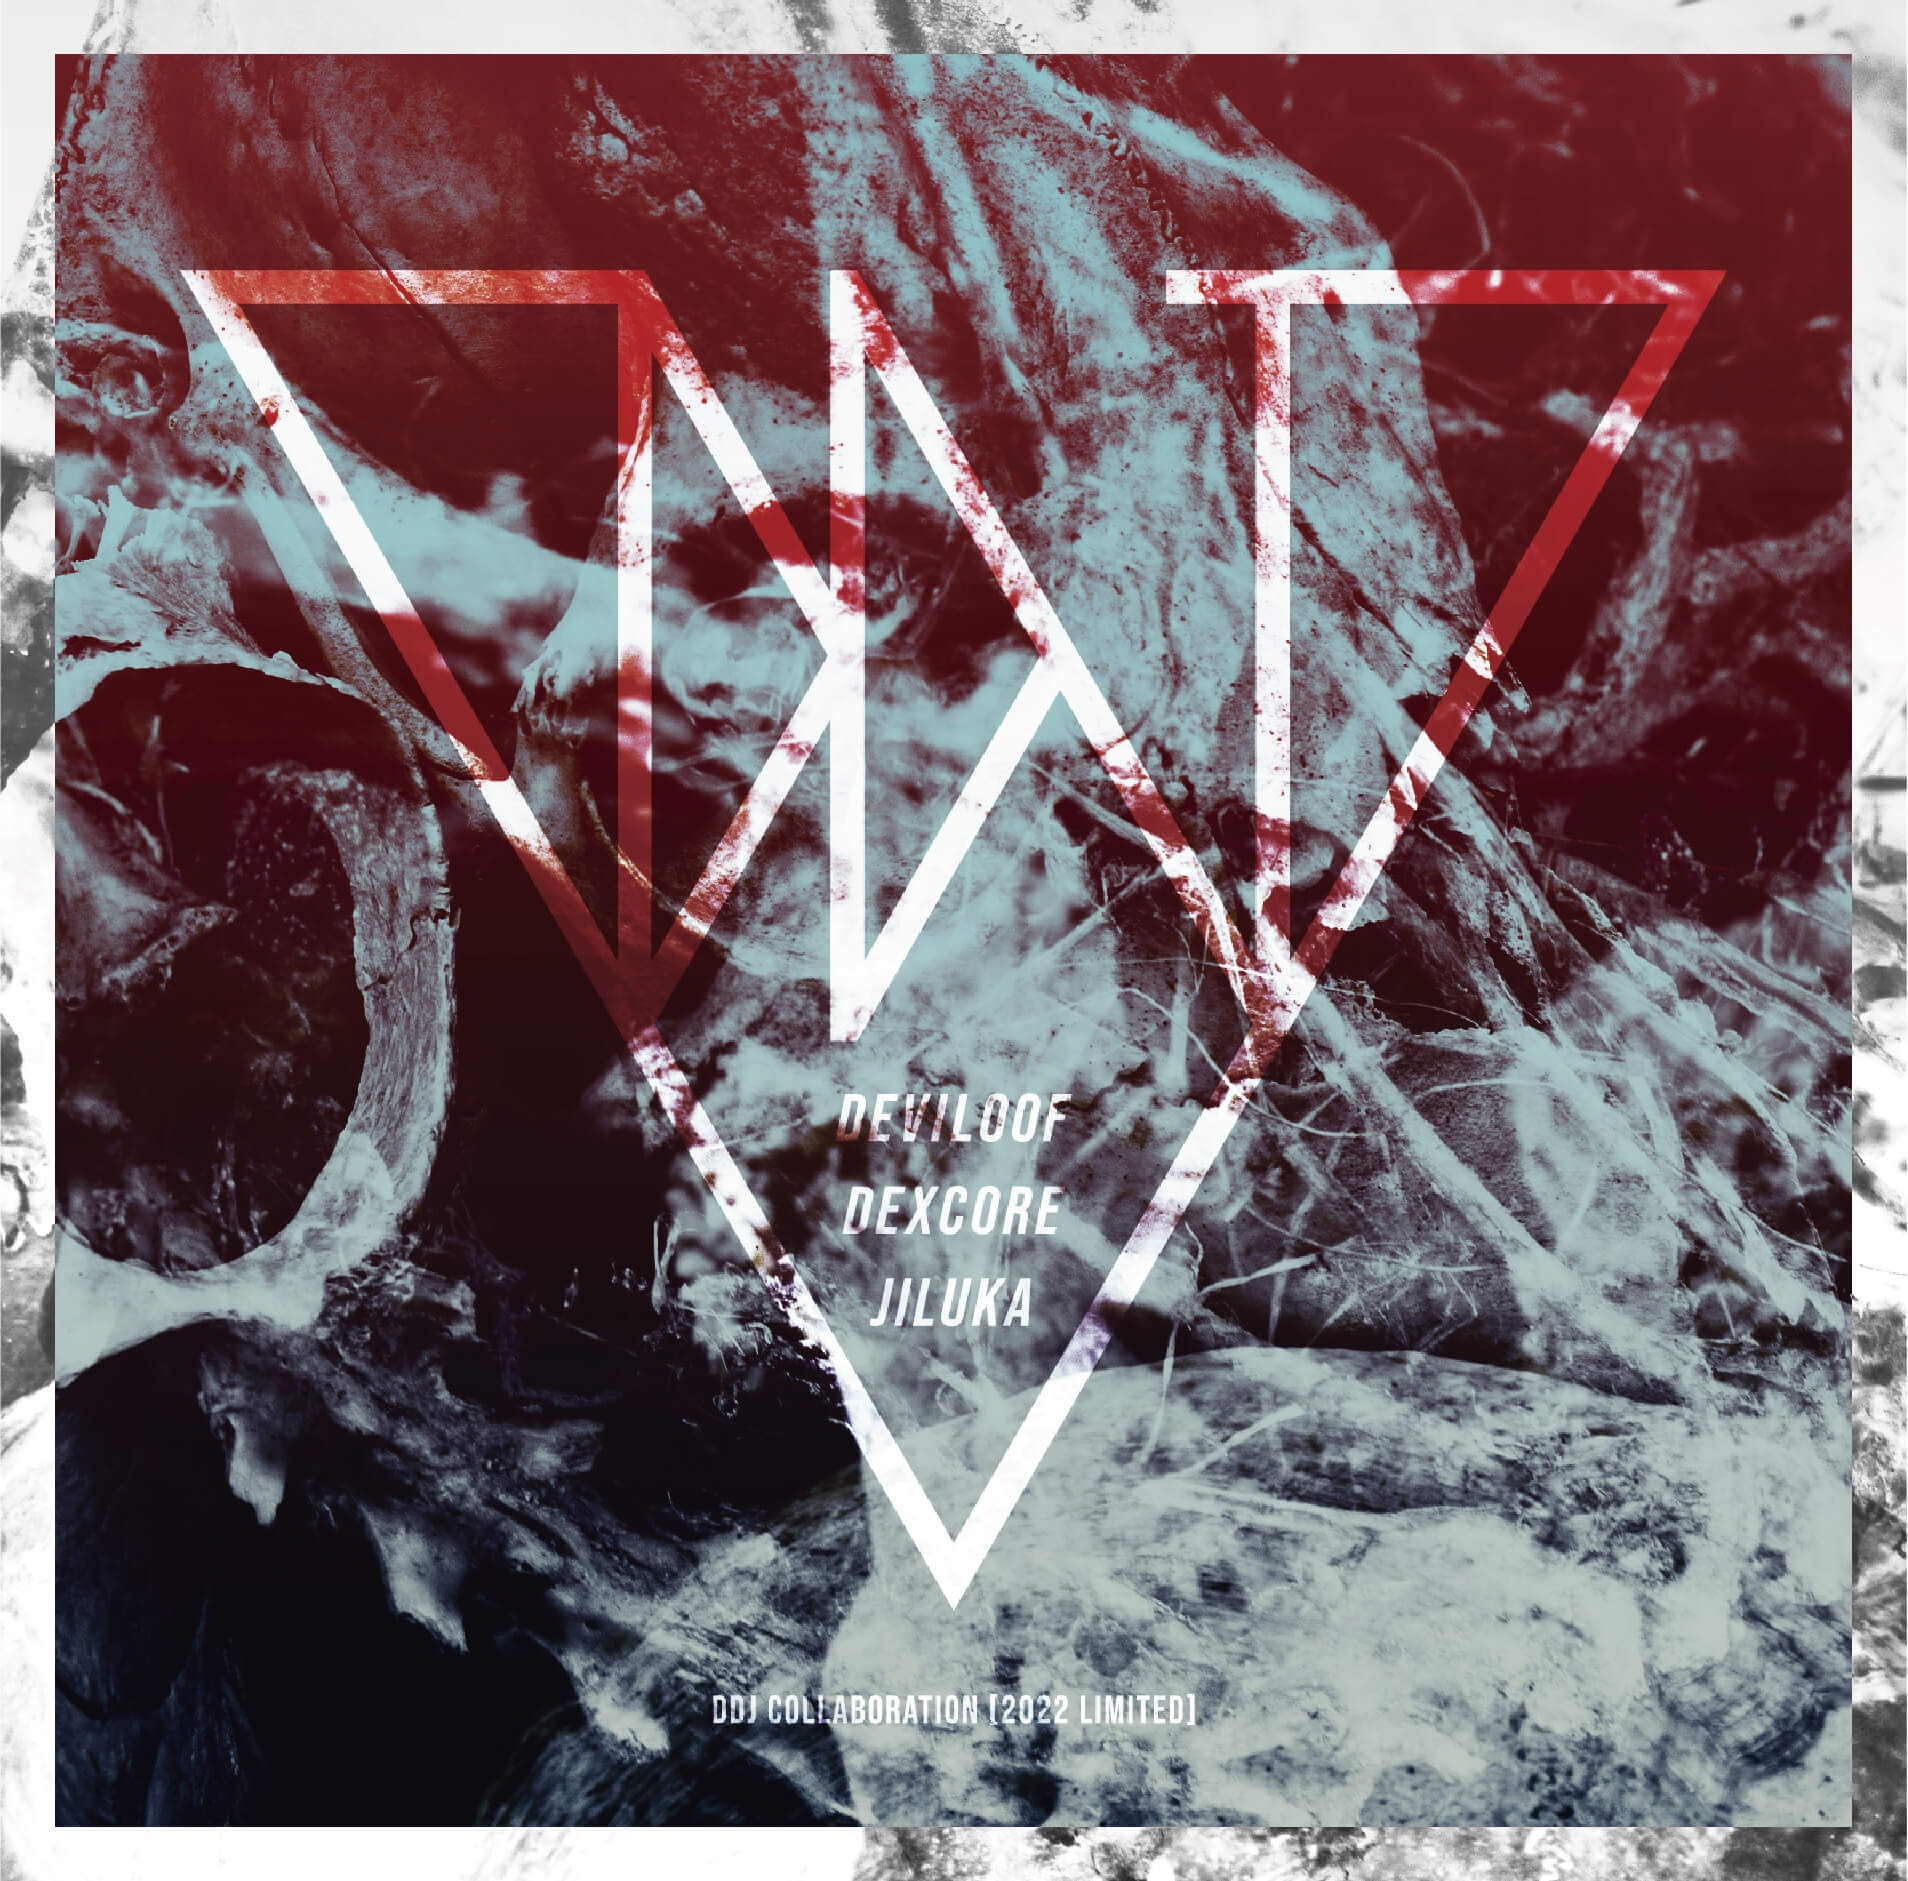 DDJ (Deviloof x Dexcore x Jiluka) new collab CD has been released 